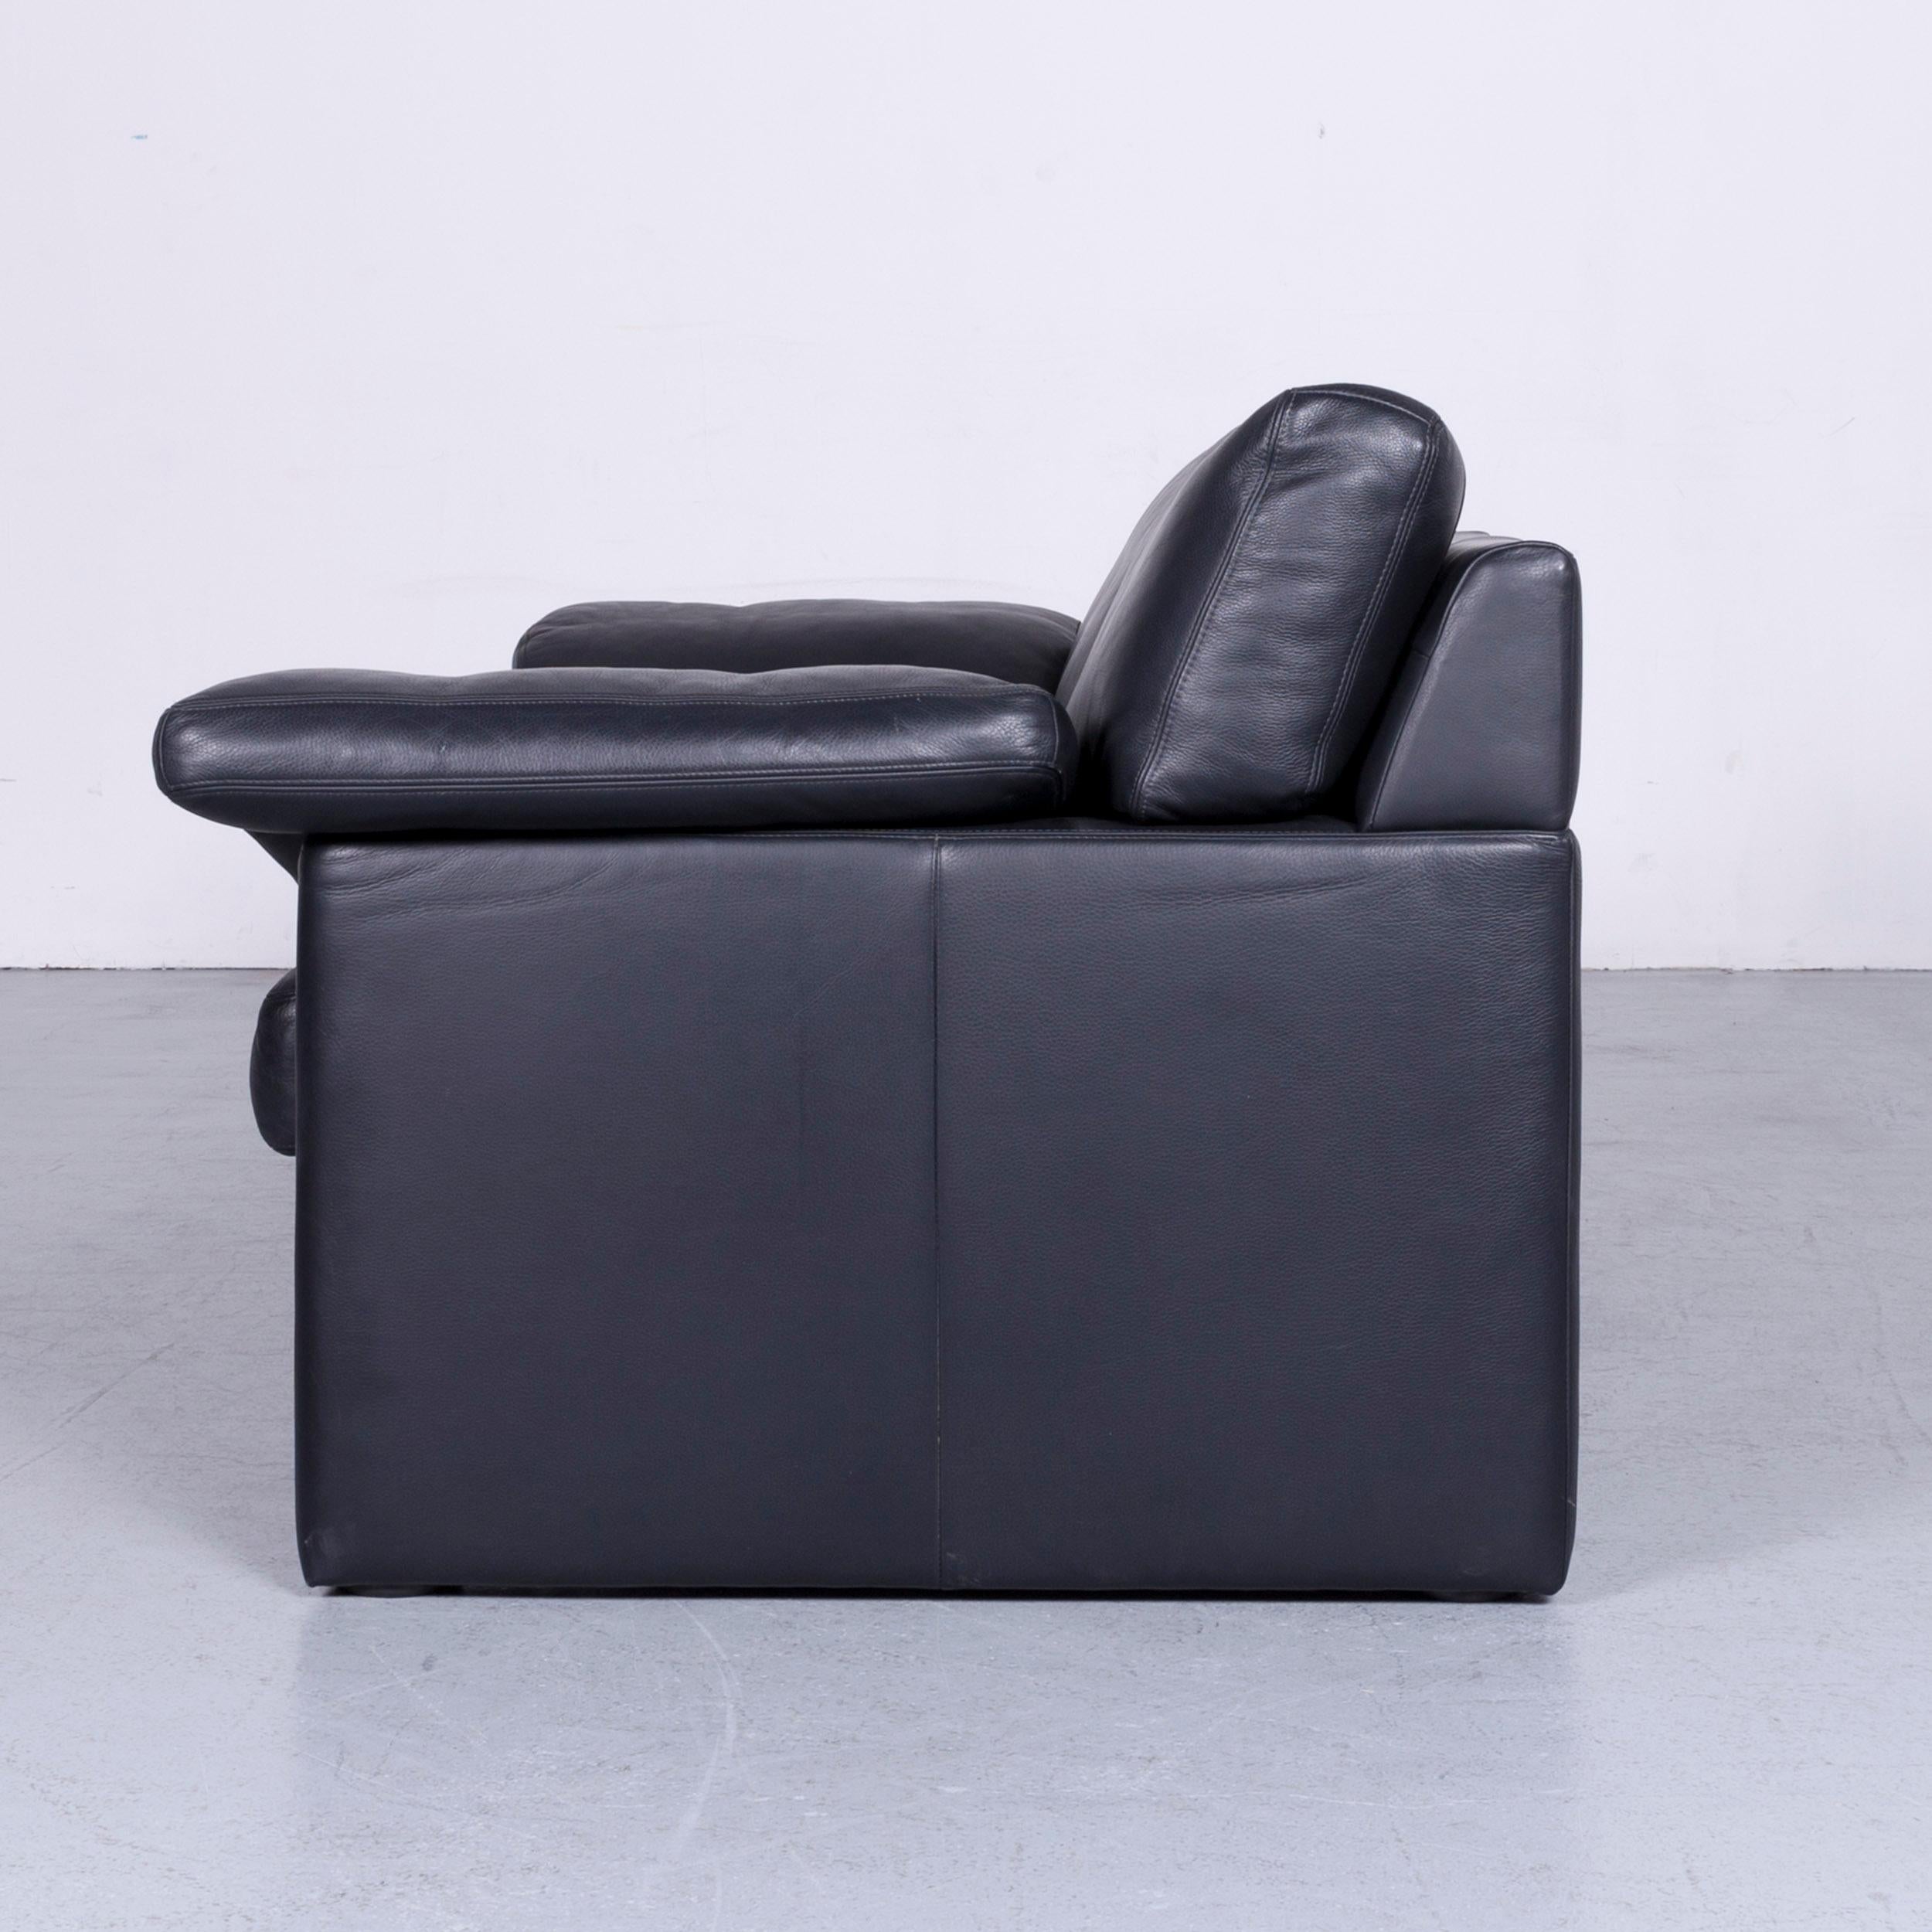 Erpo Designer Leather Sofa Black Two-Seat Couch 3